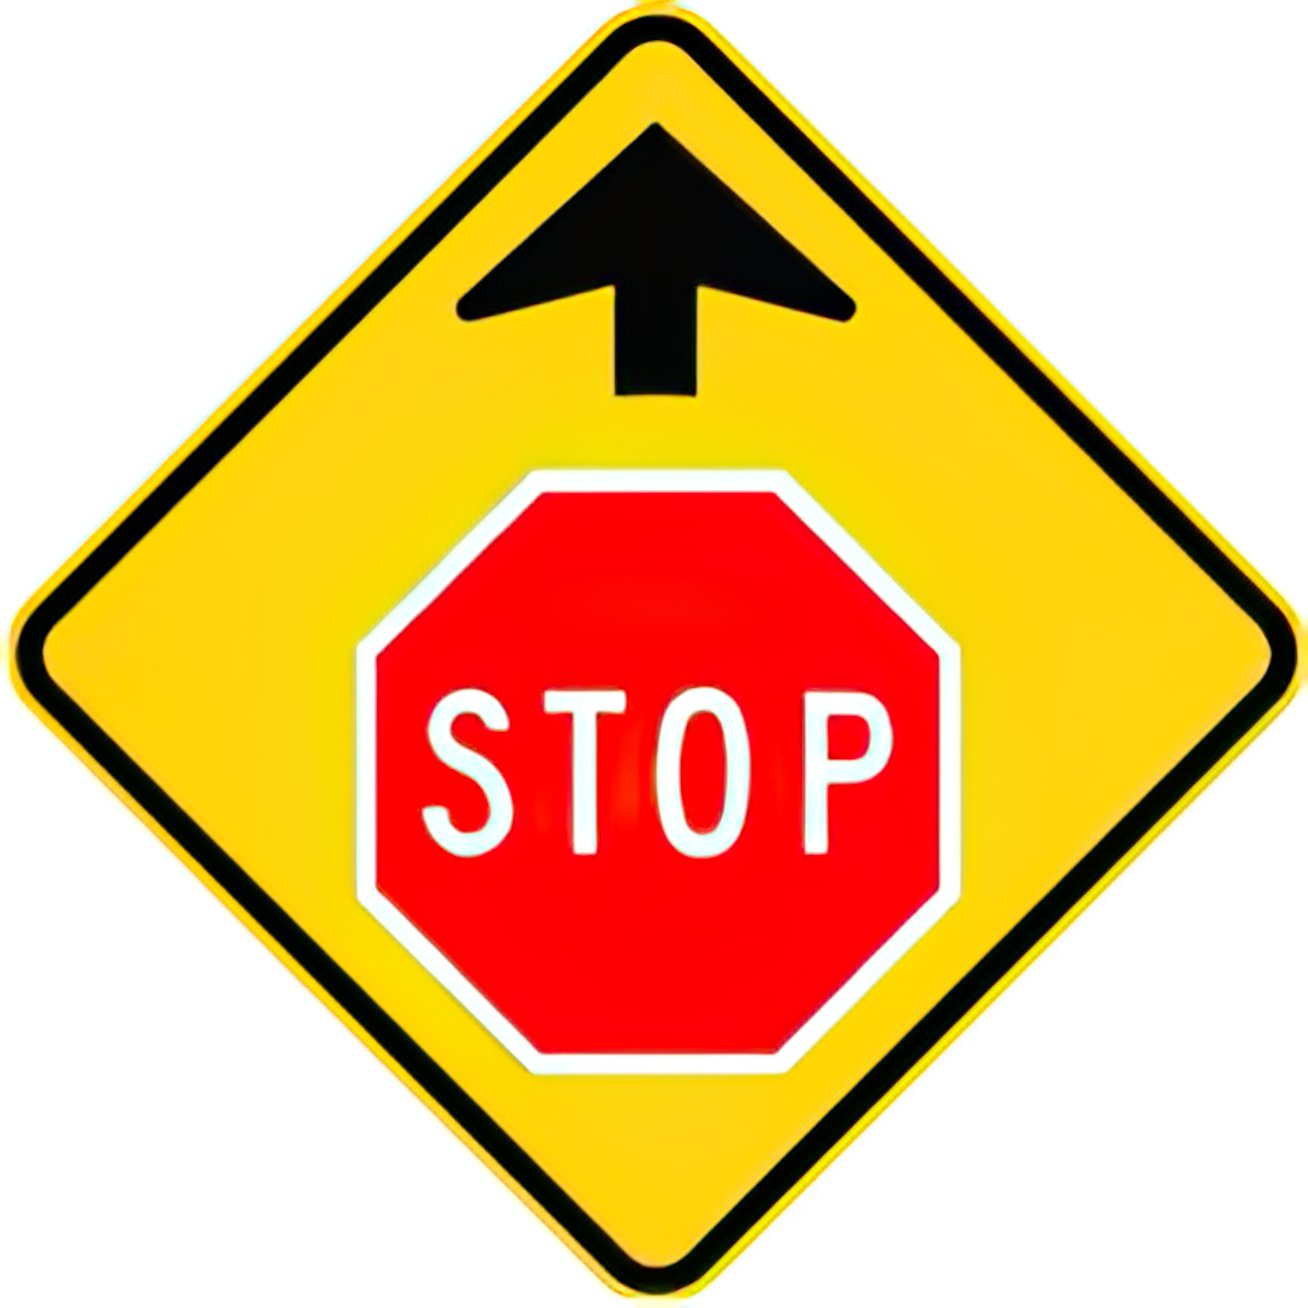 "Regulatory Stop Sign with Forward Arrow Indicator - Aluminum Road Sign"